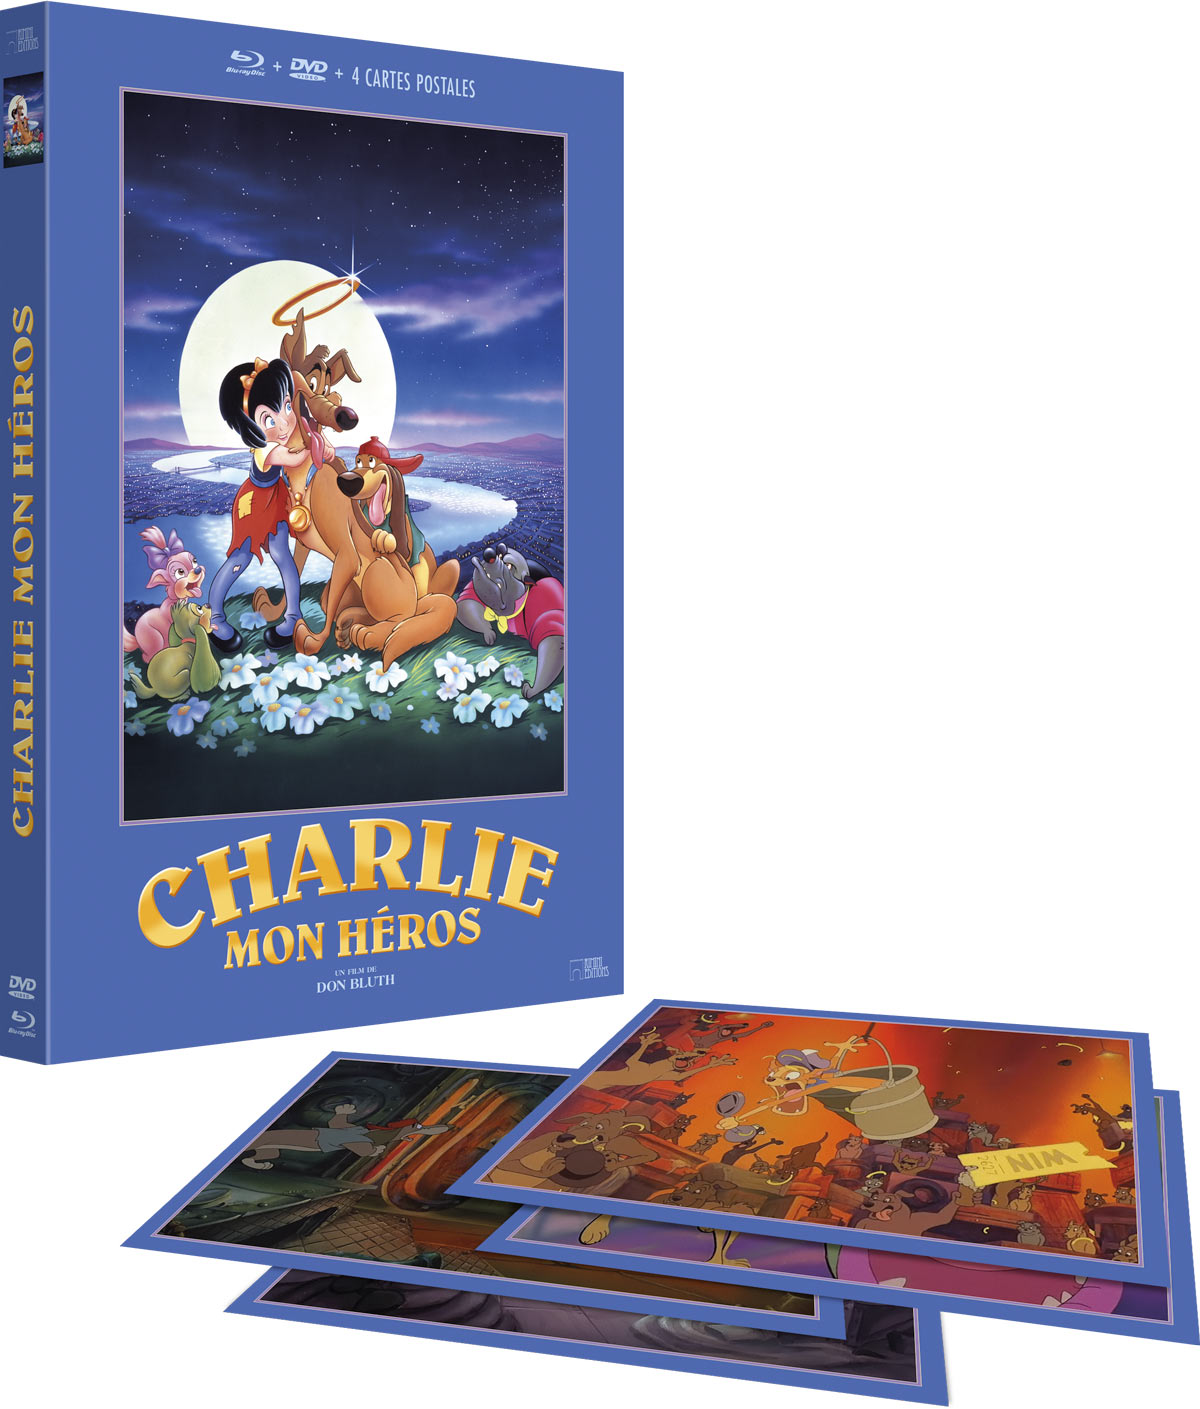 Charlie, mon héros - Combo Blu-ray + DVD + 4 cartes postales - Rimini Editions